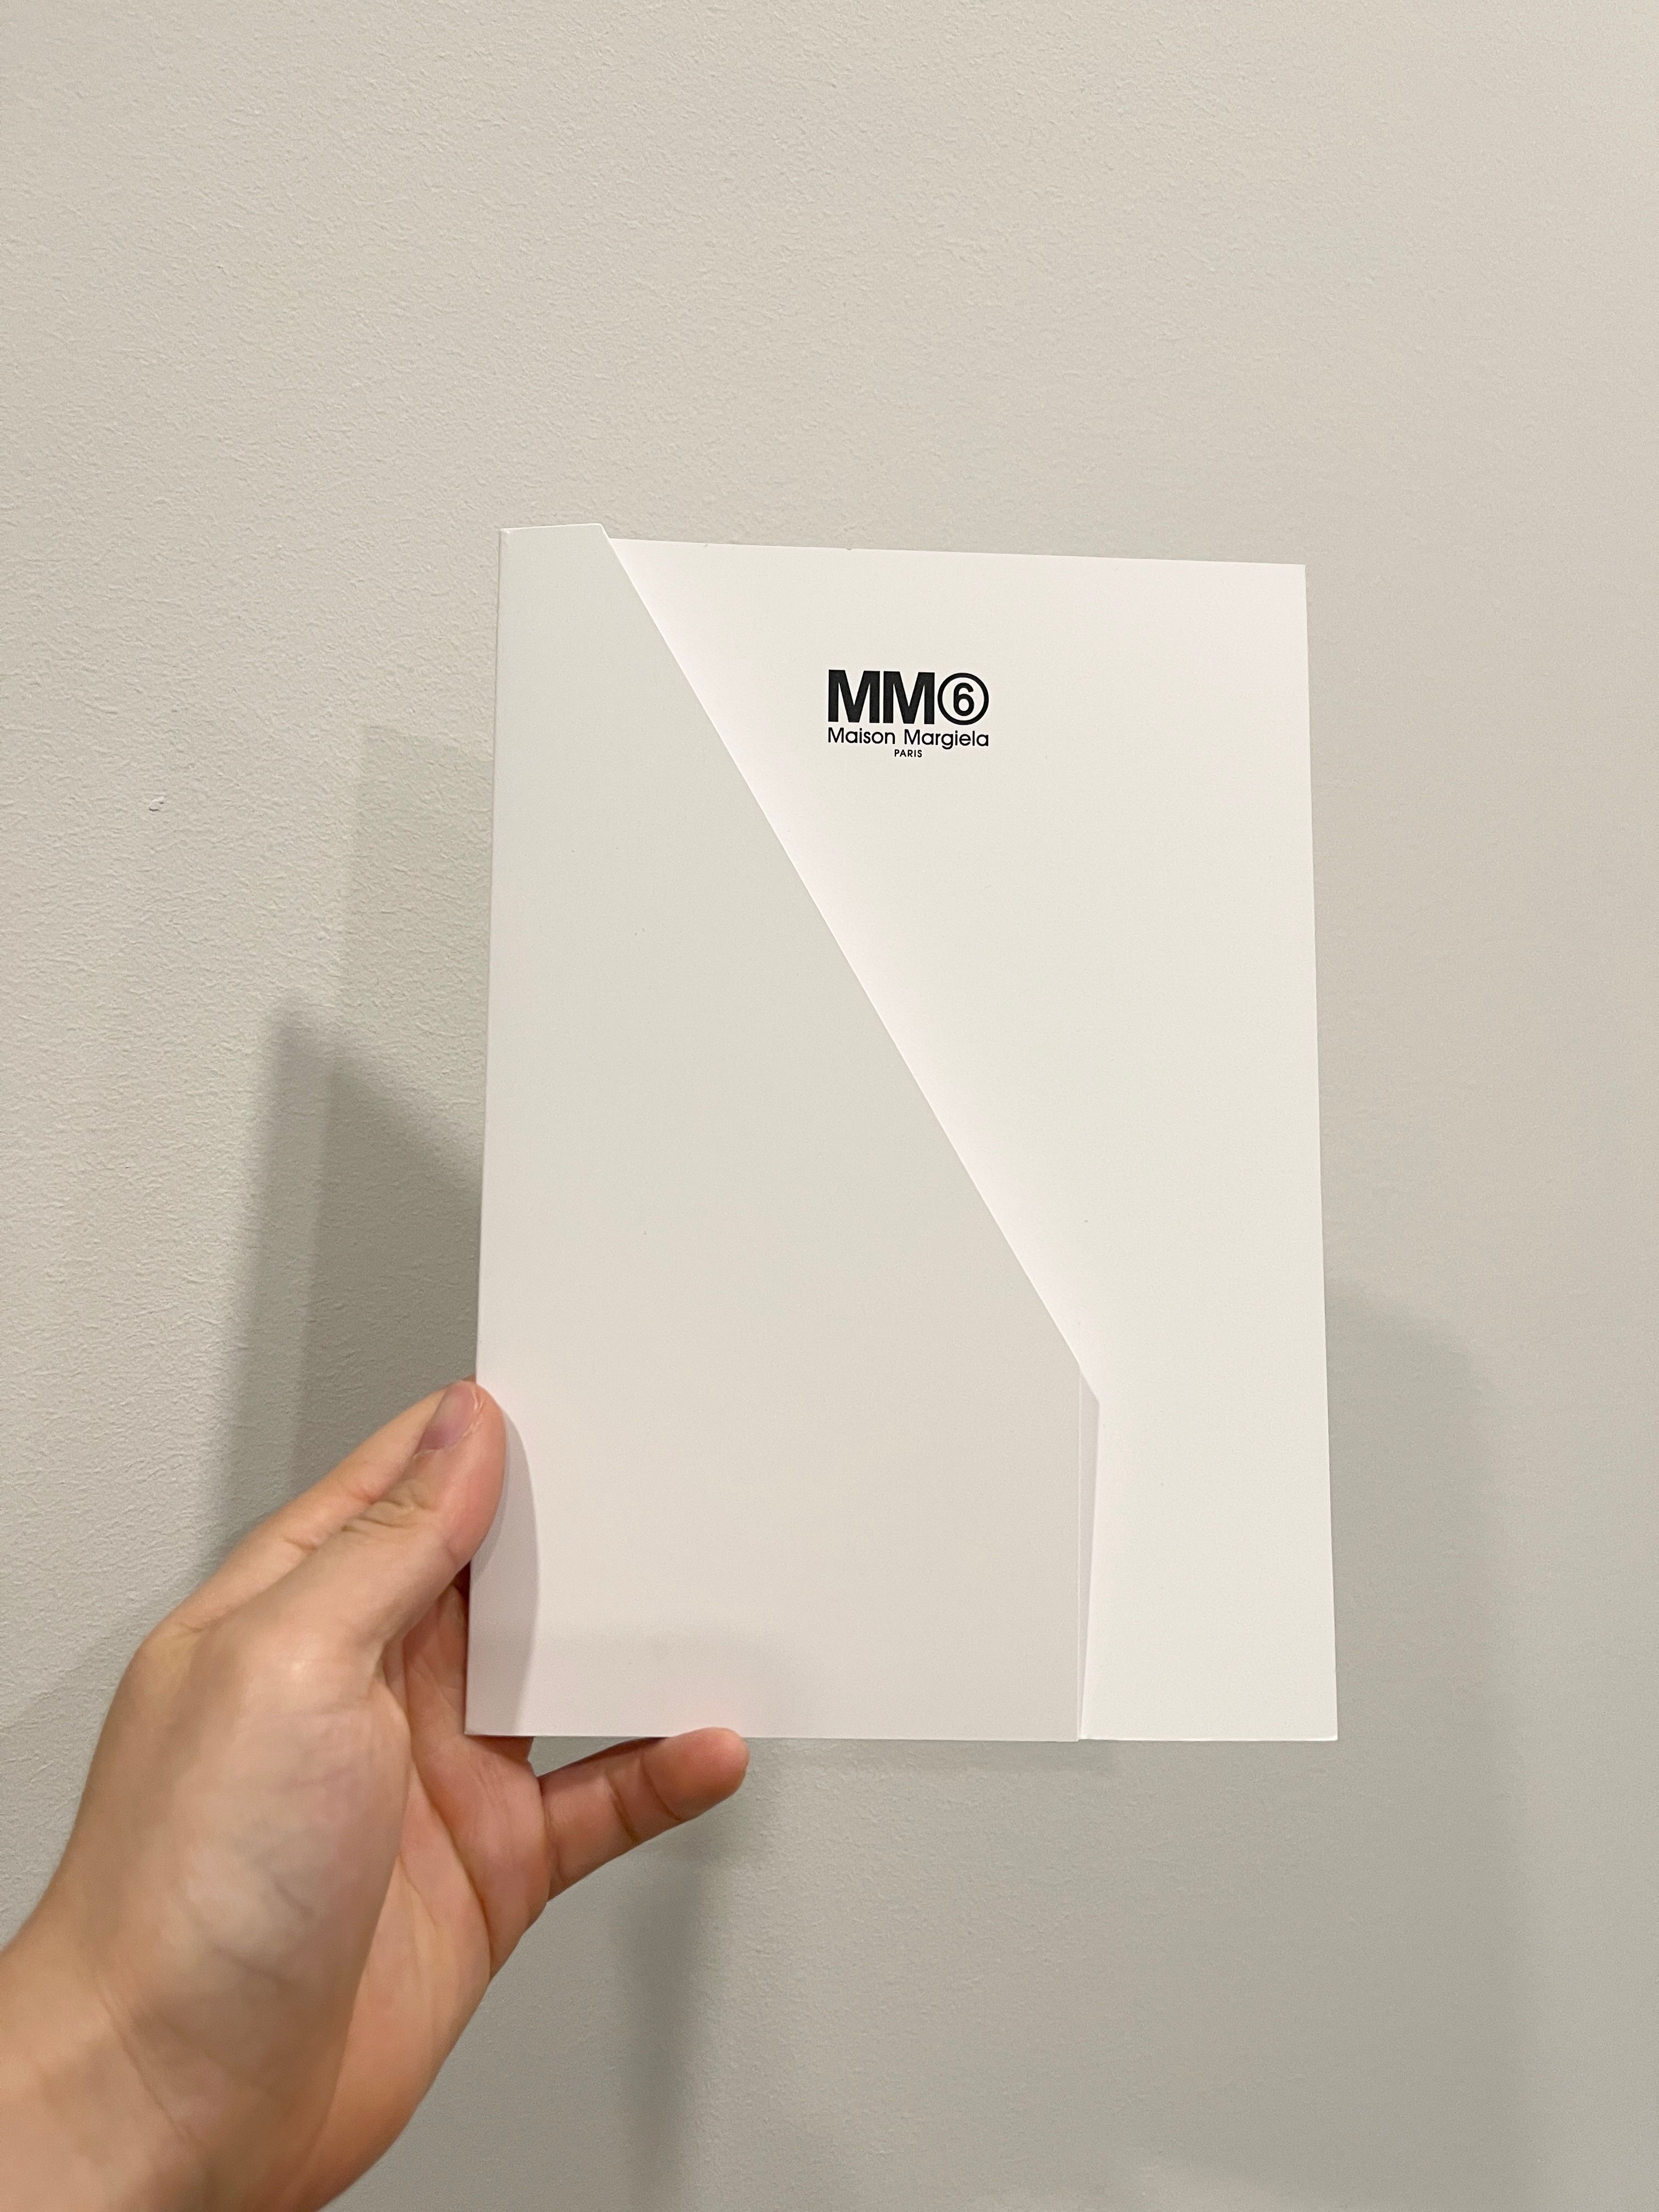 MM6 by Madison Margiela Small Paper Folder - 1